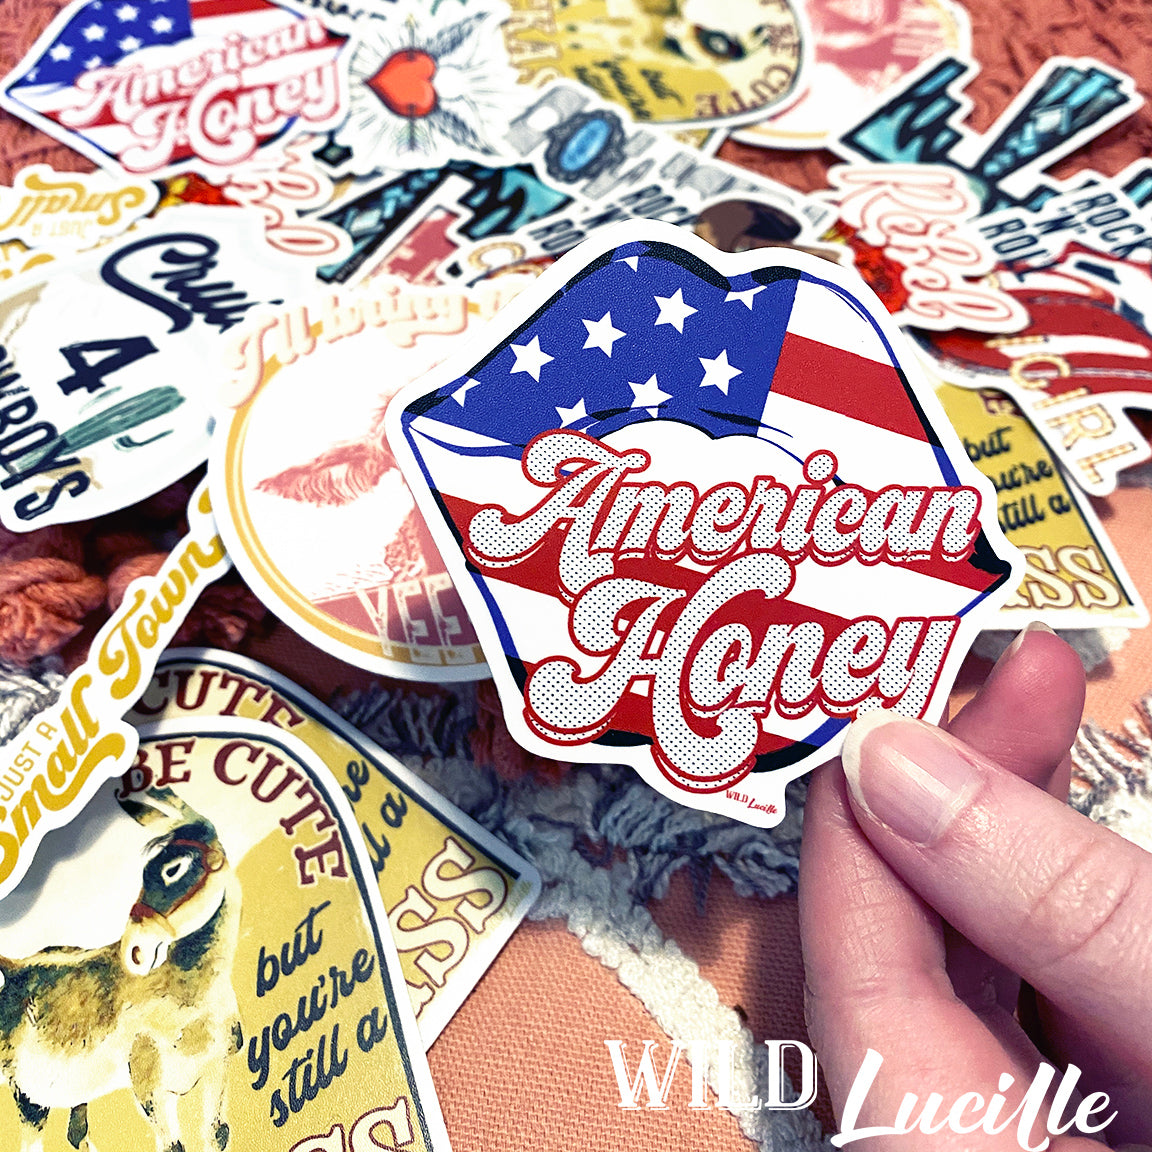 American Honey Flag Kiss - Die Cut Vinyl Sticker Decals